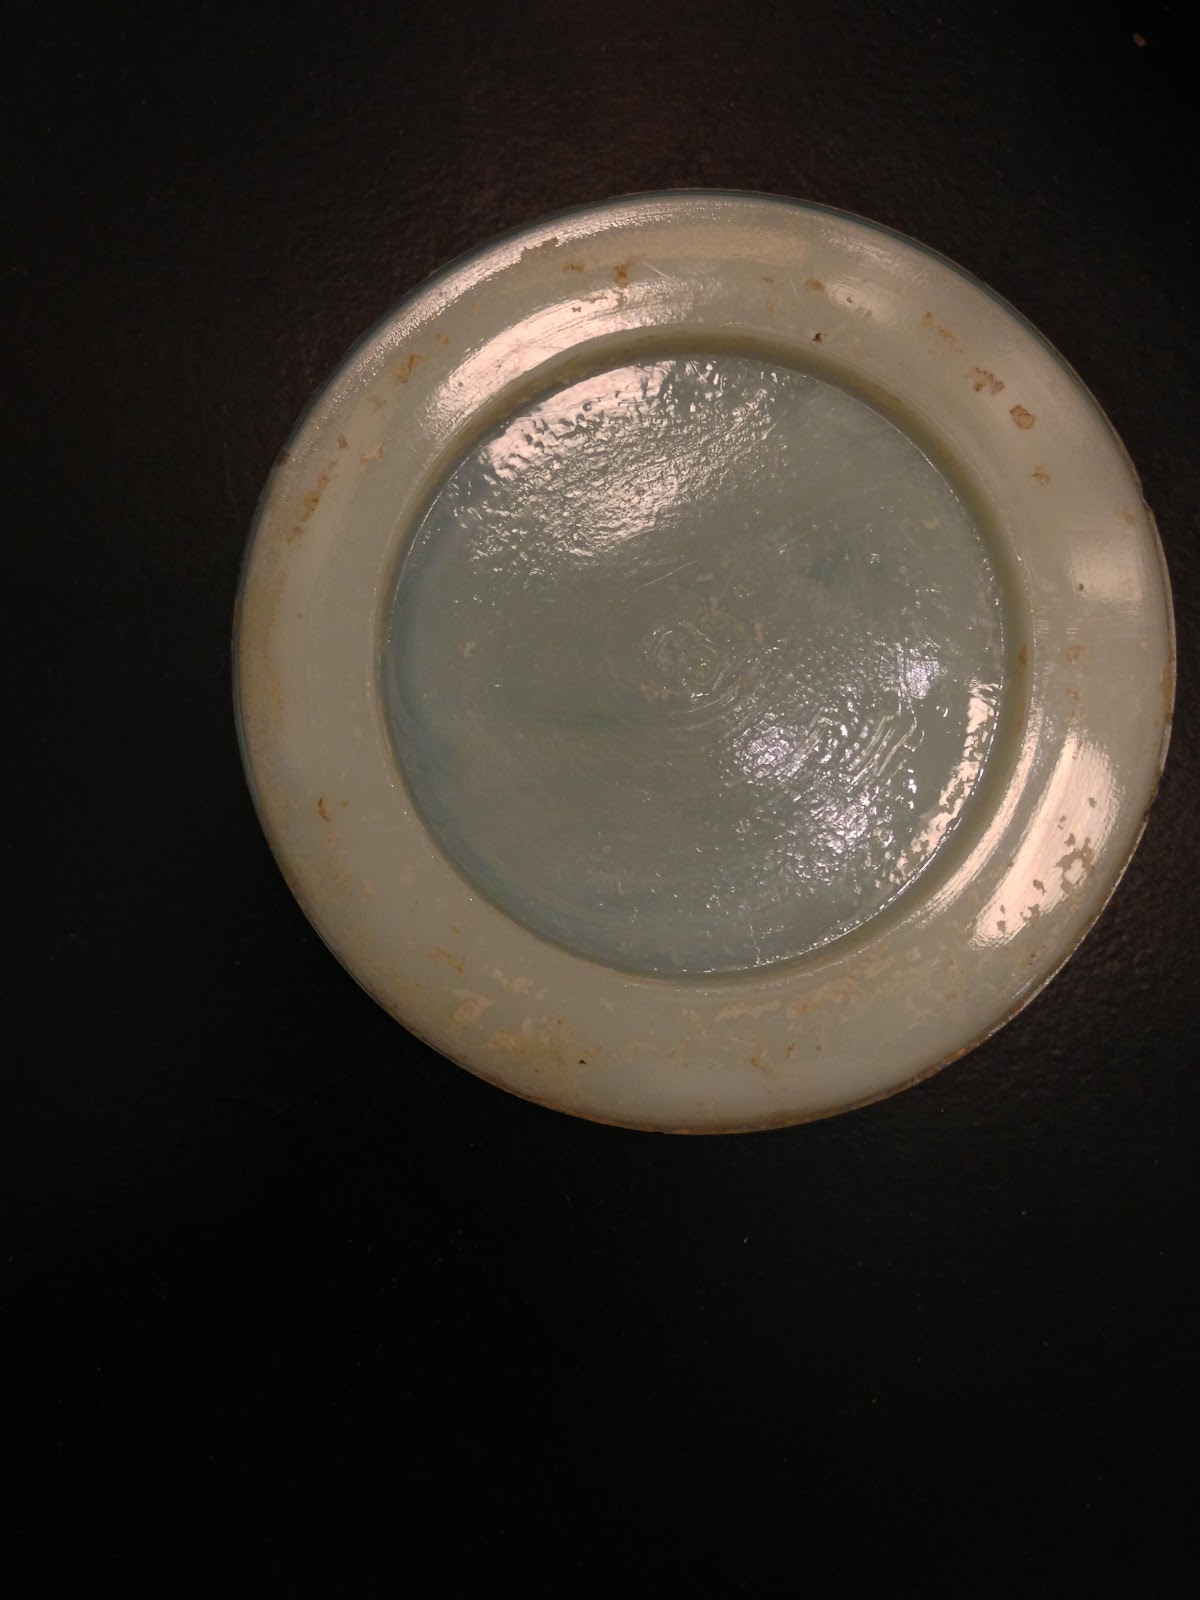 6 Boyds milk glass insert's for Mason jars. Boyd's Porcelain cap's 6 Genuine Boyd's Porcelain Lined Caps